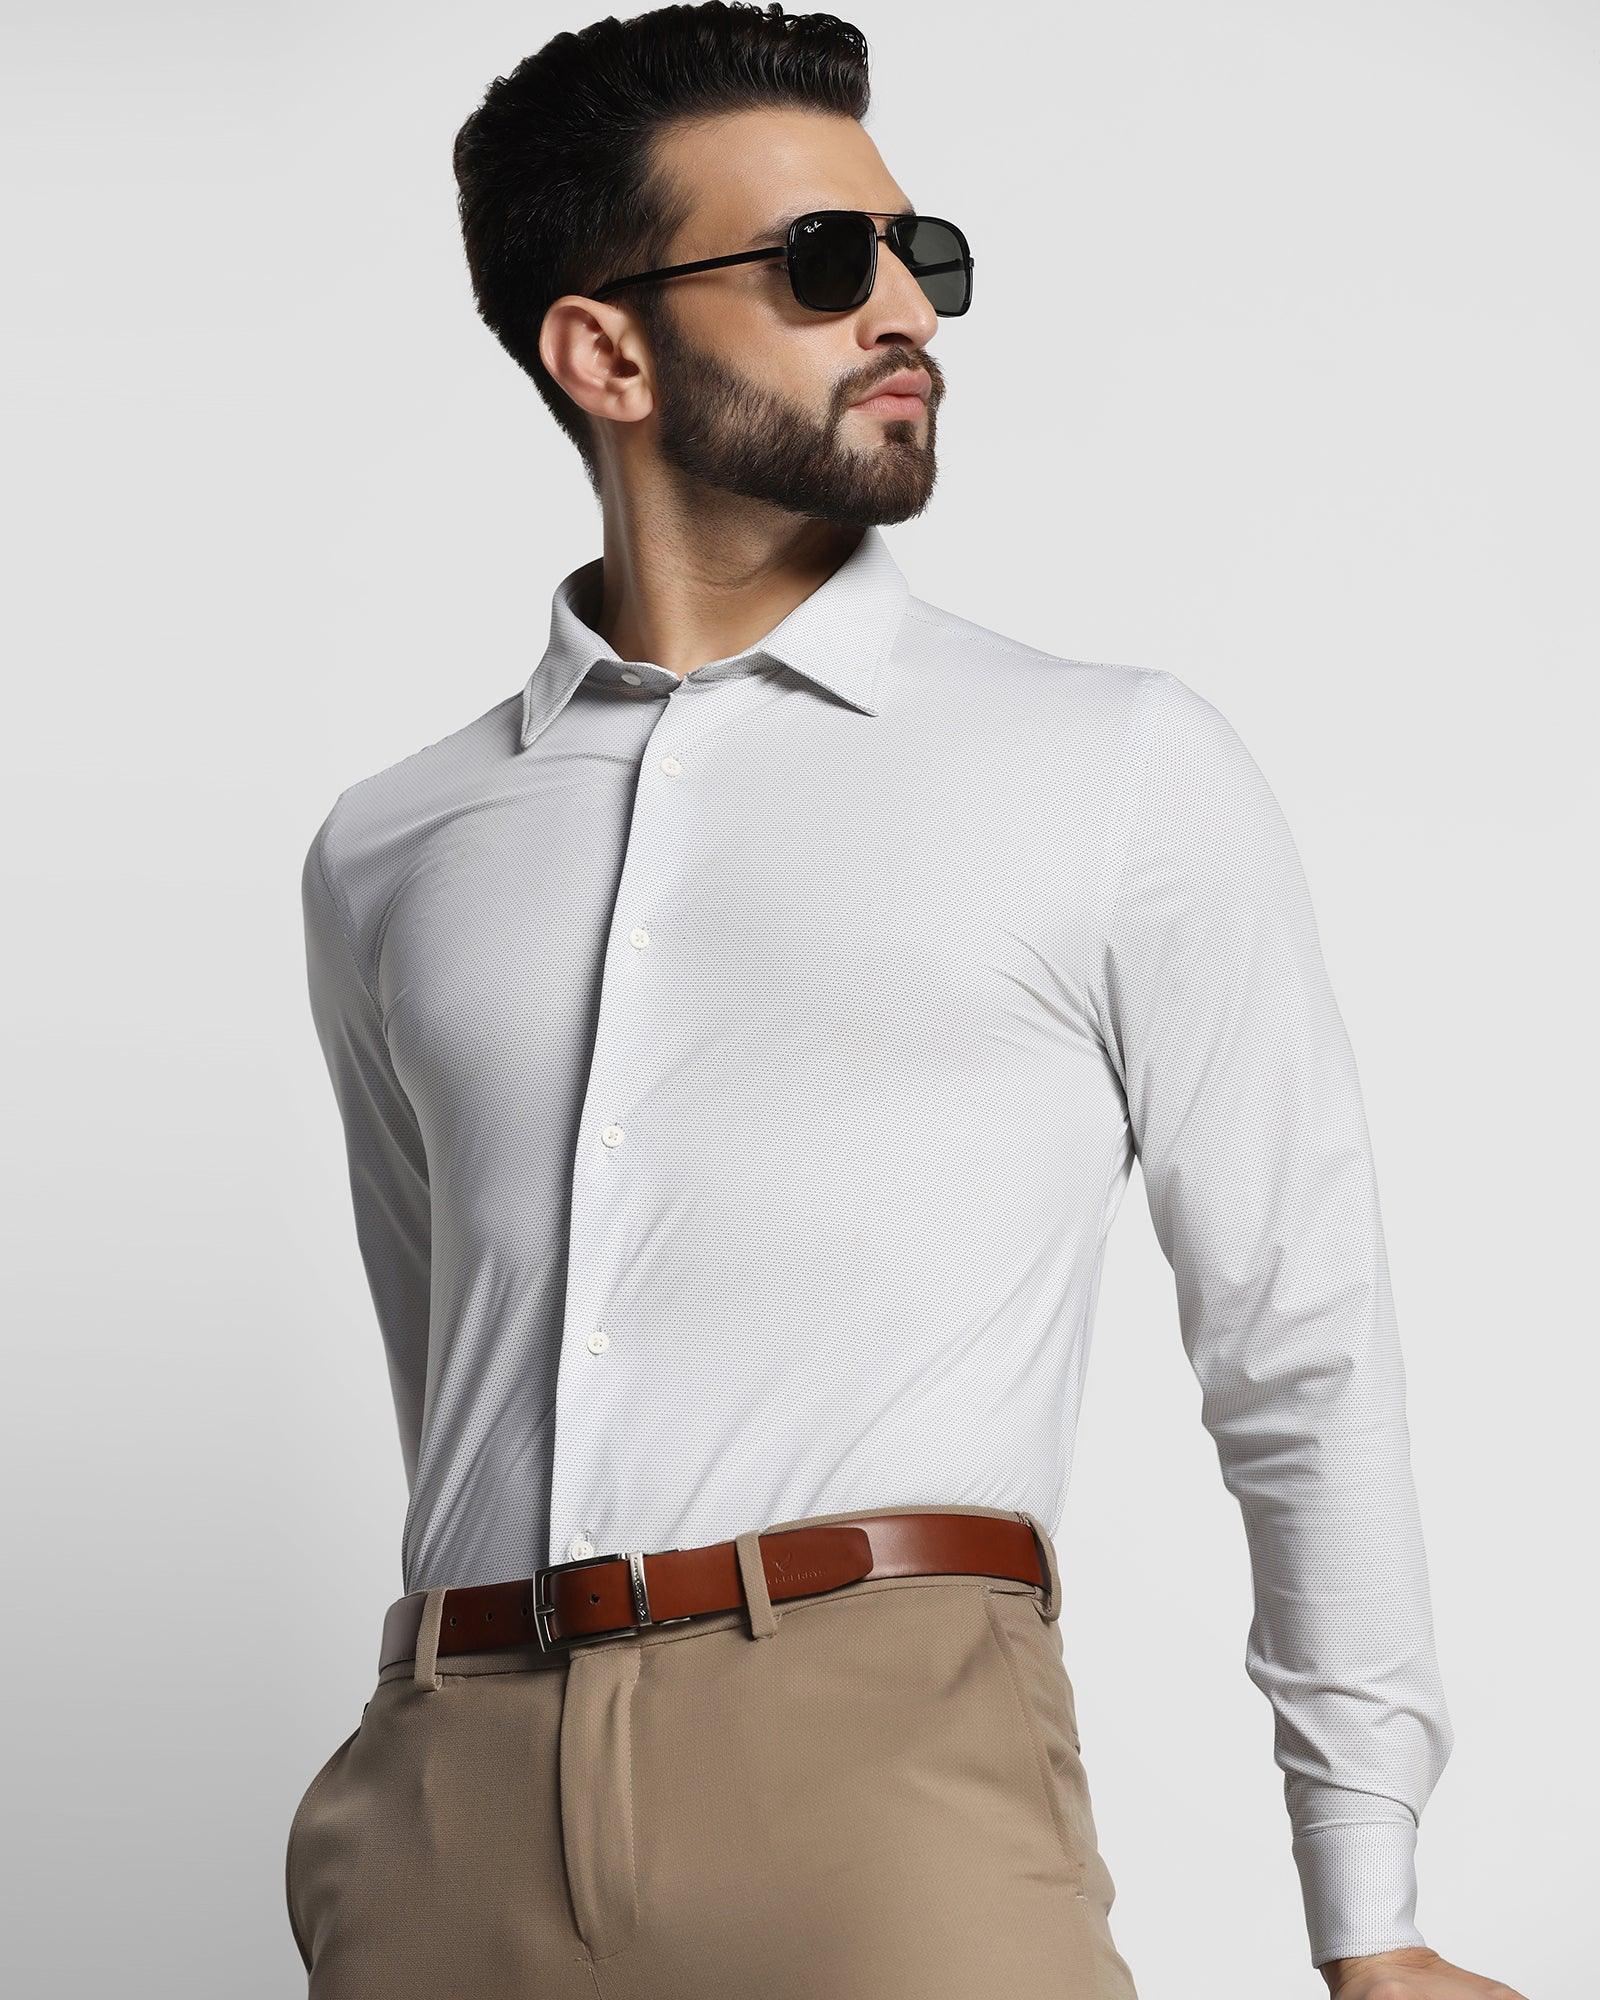 TechPro Formal White Textured Shirt - Melvin